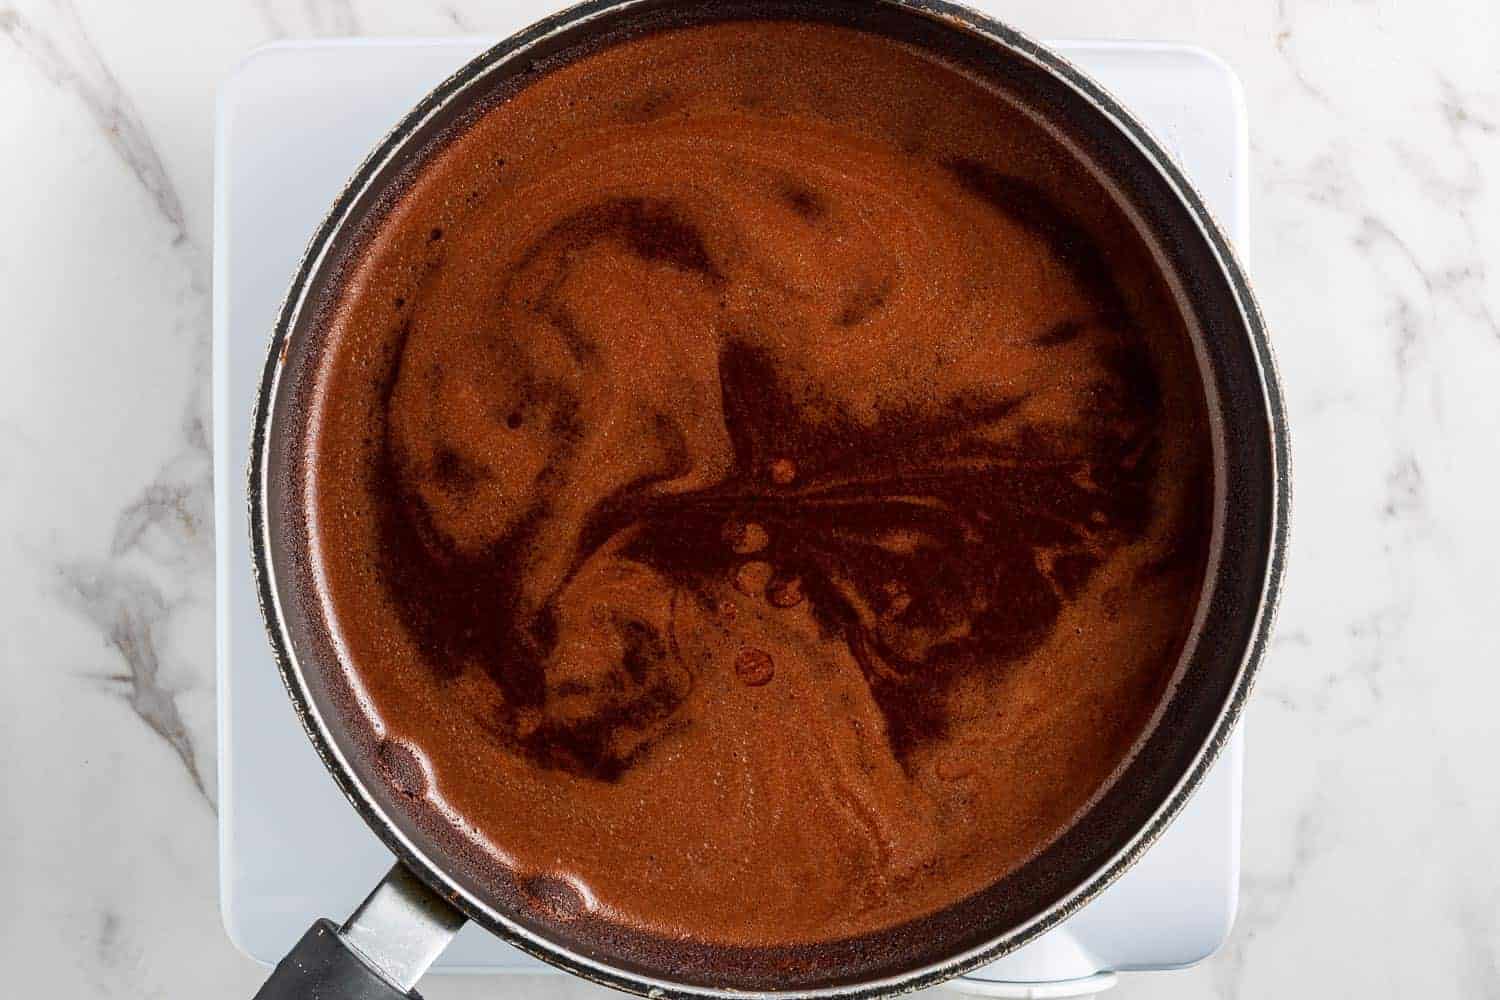 Chocolate in a saucepan.